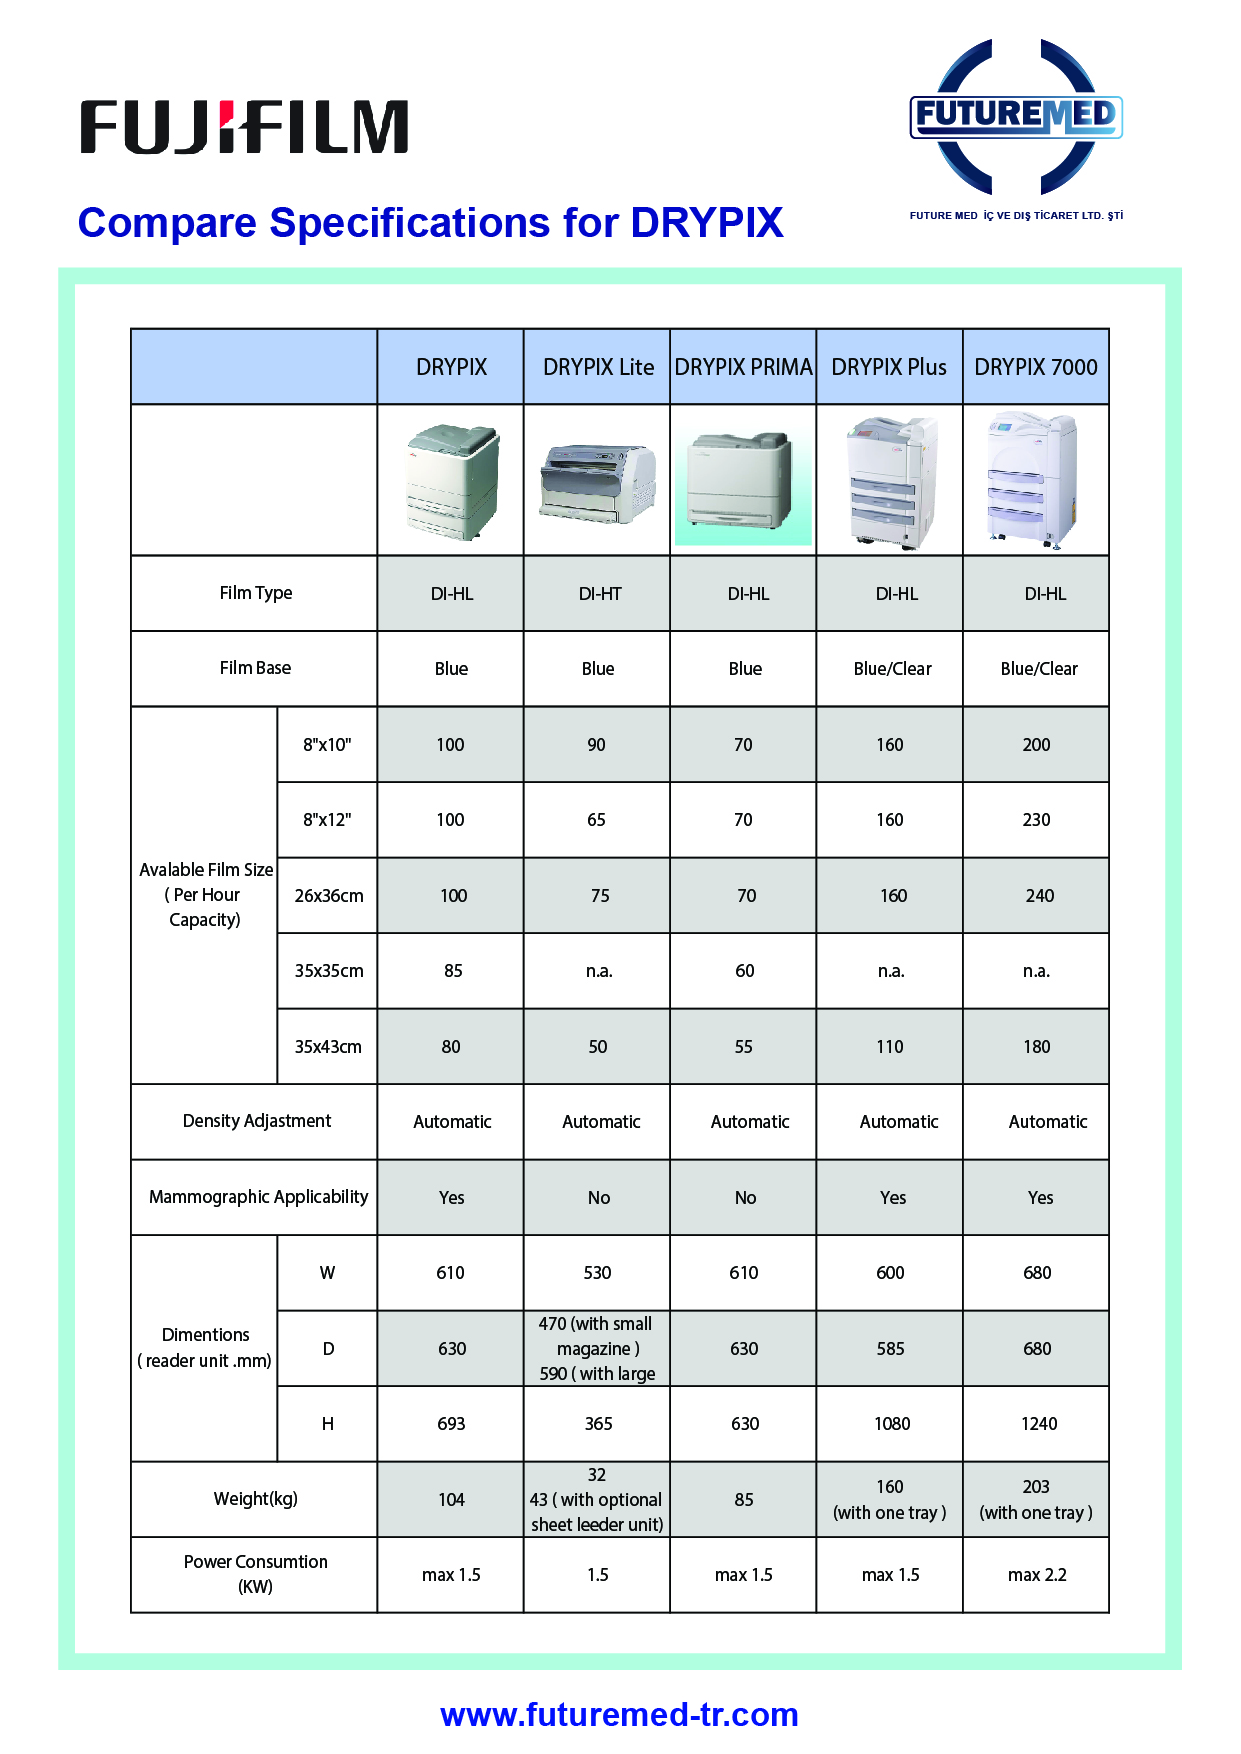 Comparison of Fujifilm Healthcare Printers Features